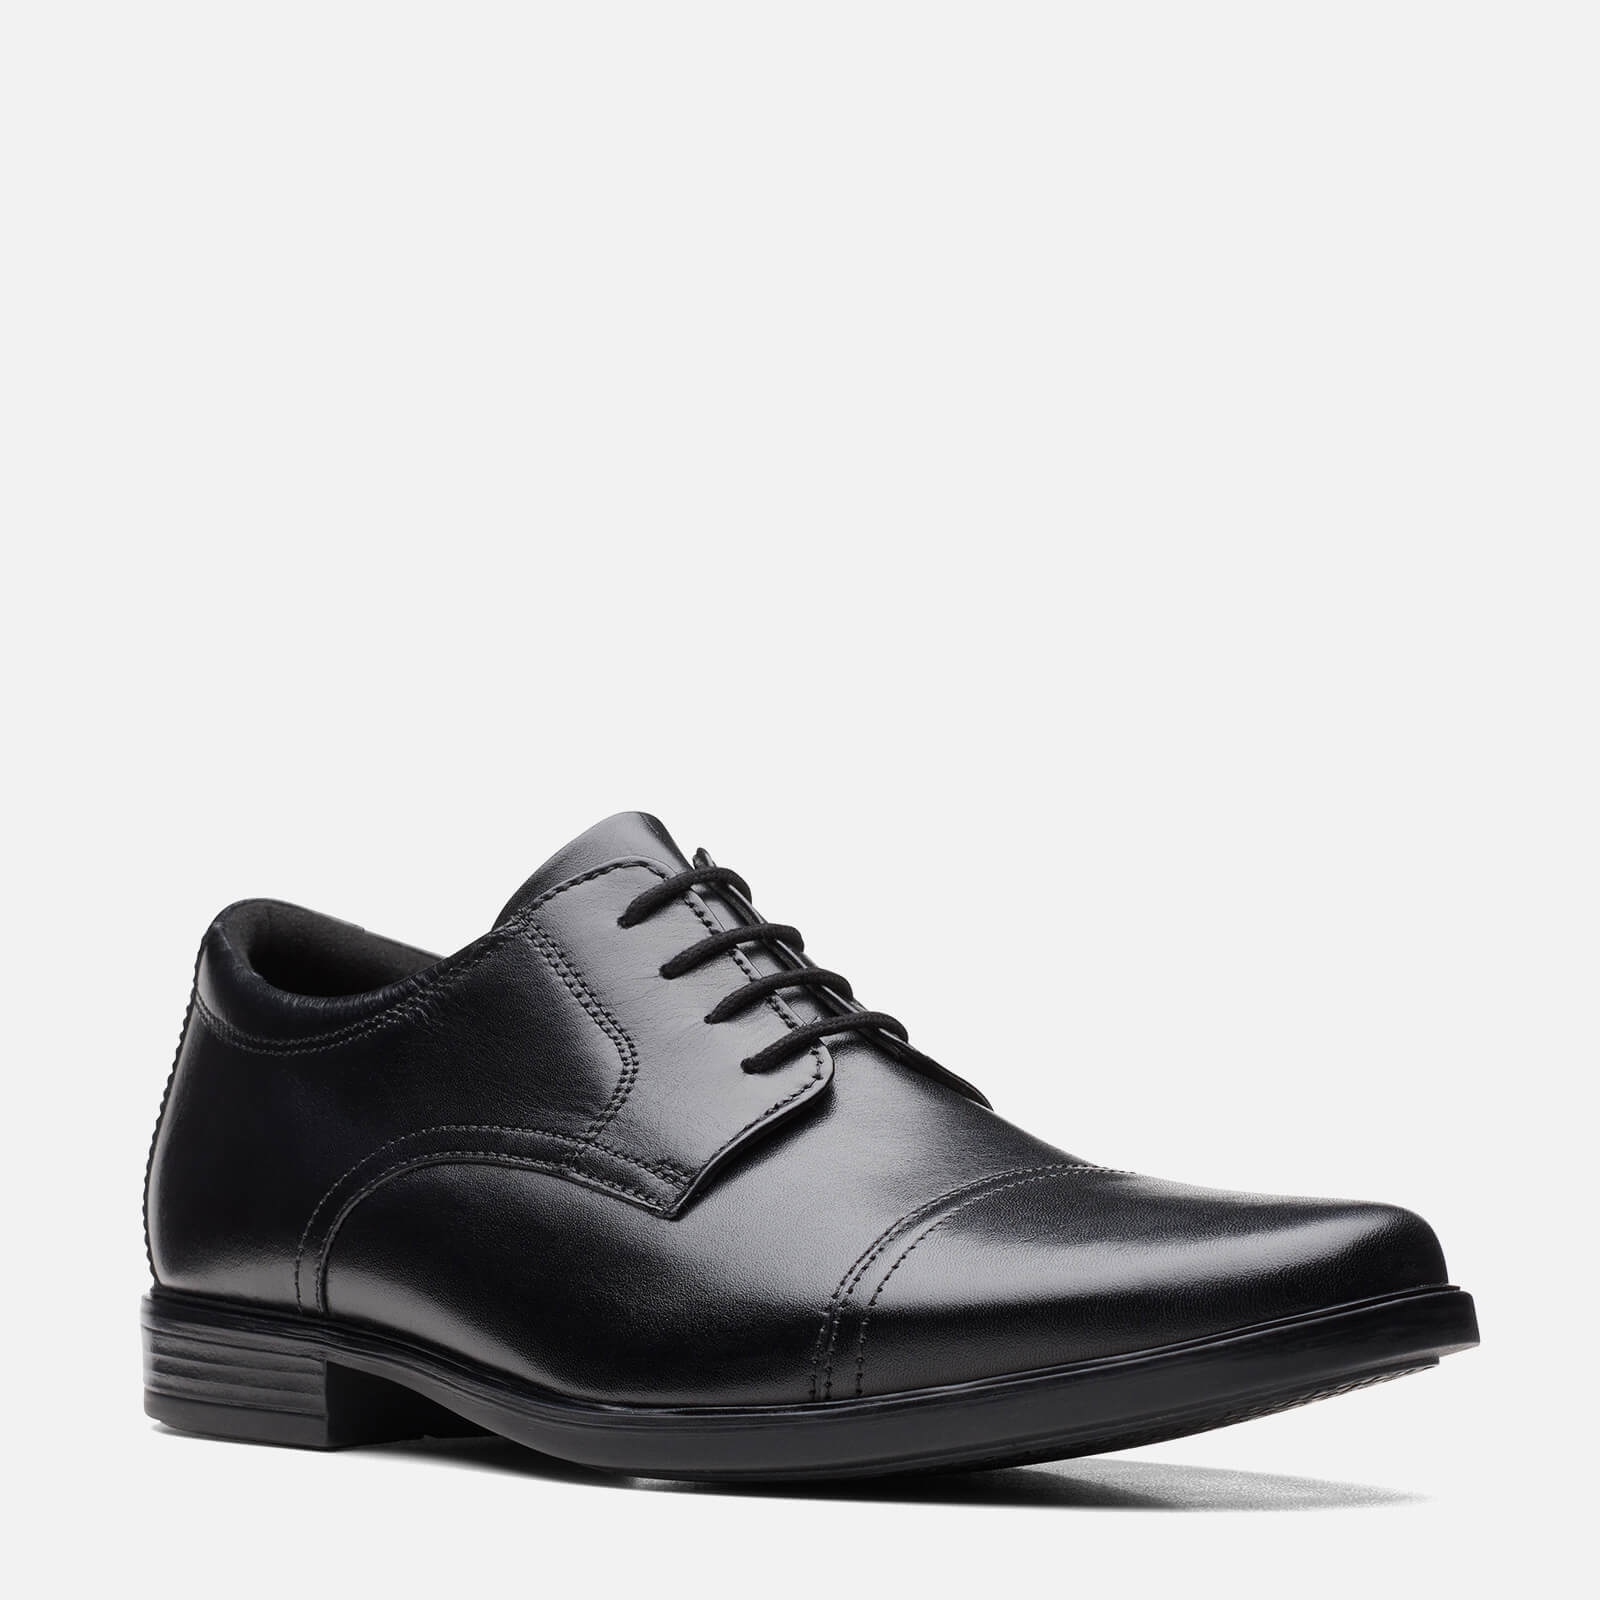 clarks men's howard cap leather oxford shoes - black